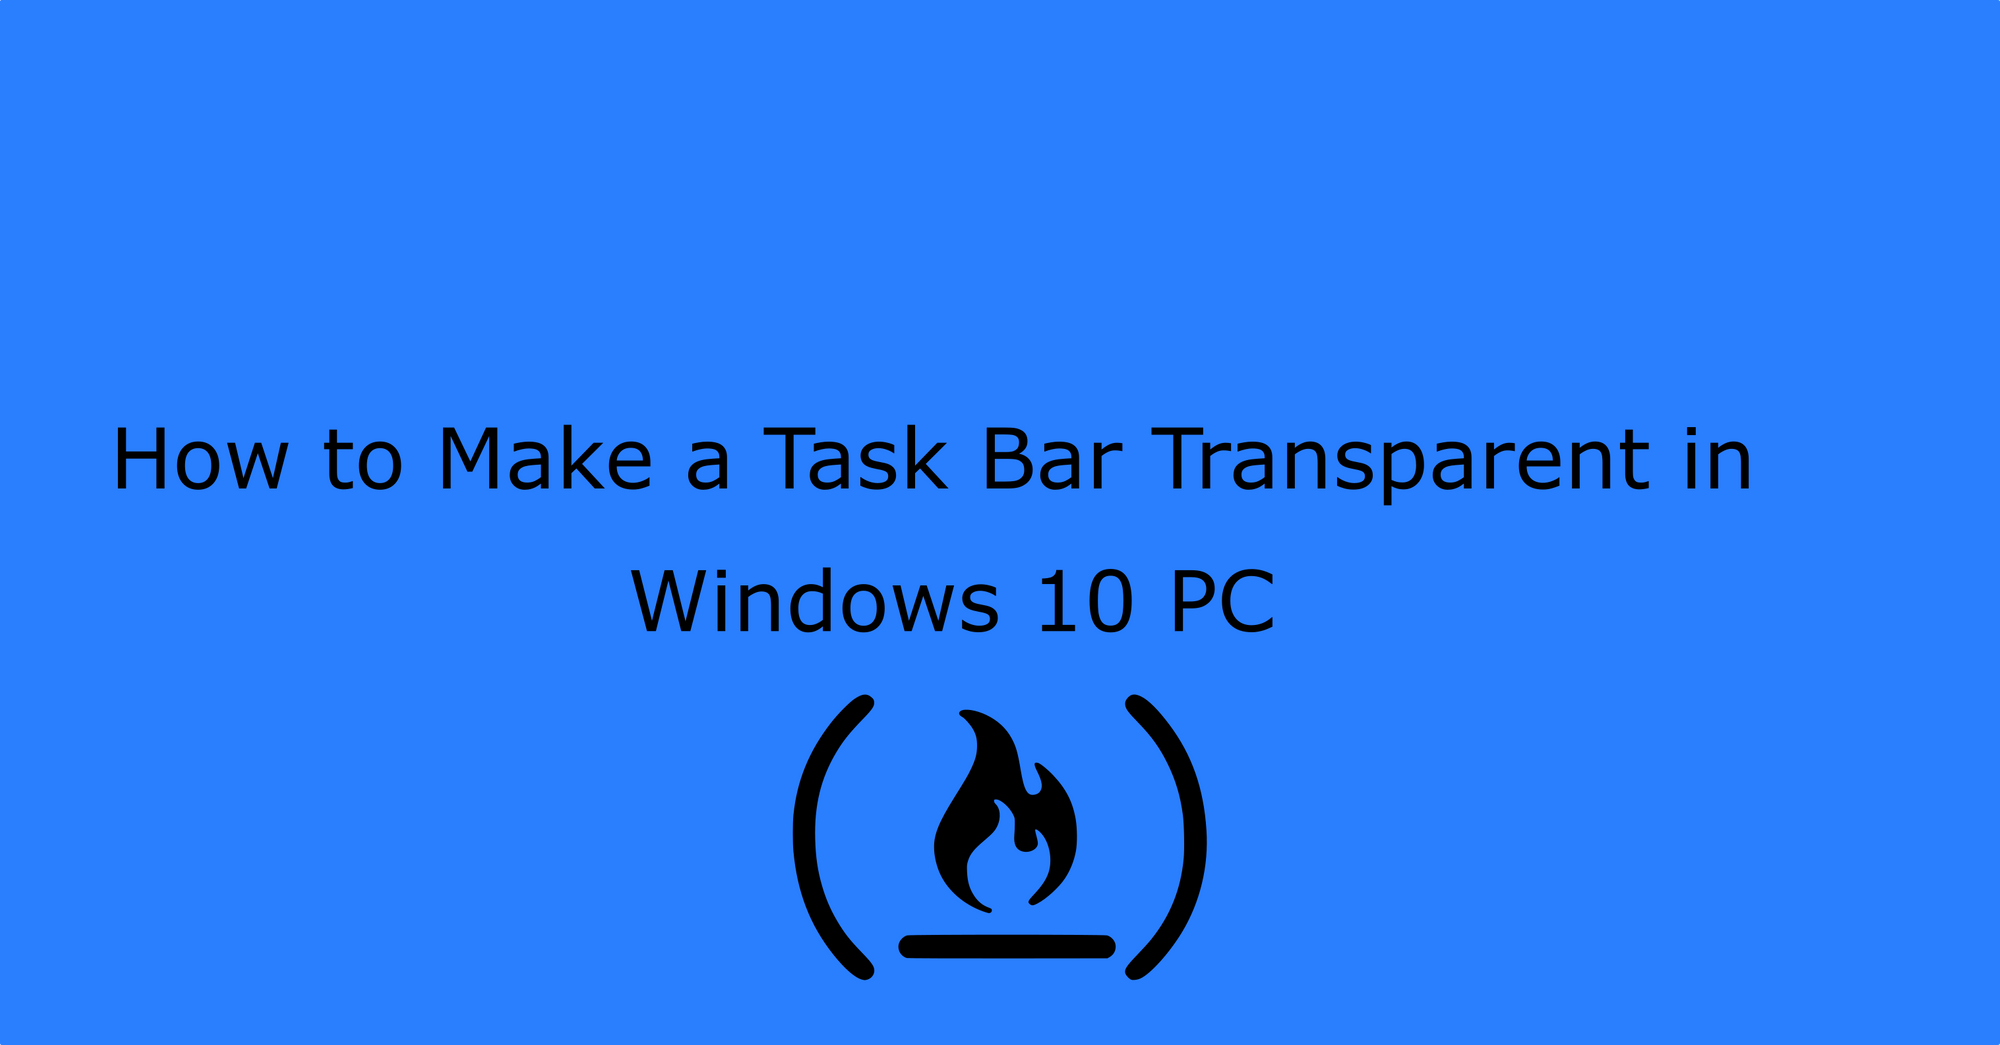 Transparent Taskbar – How to Make a Task Bar Transparent in Windows 10 PC